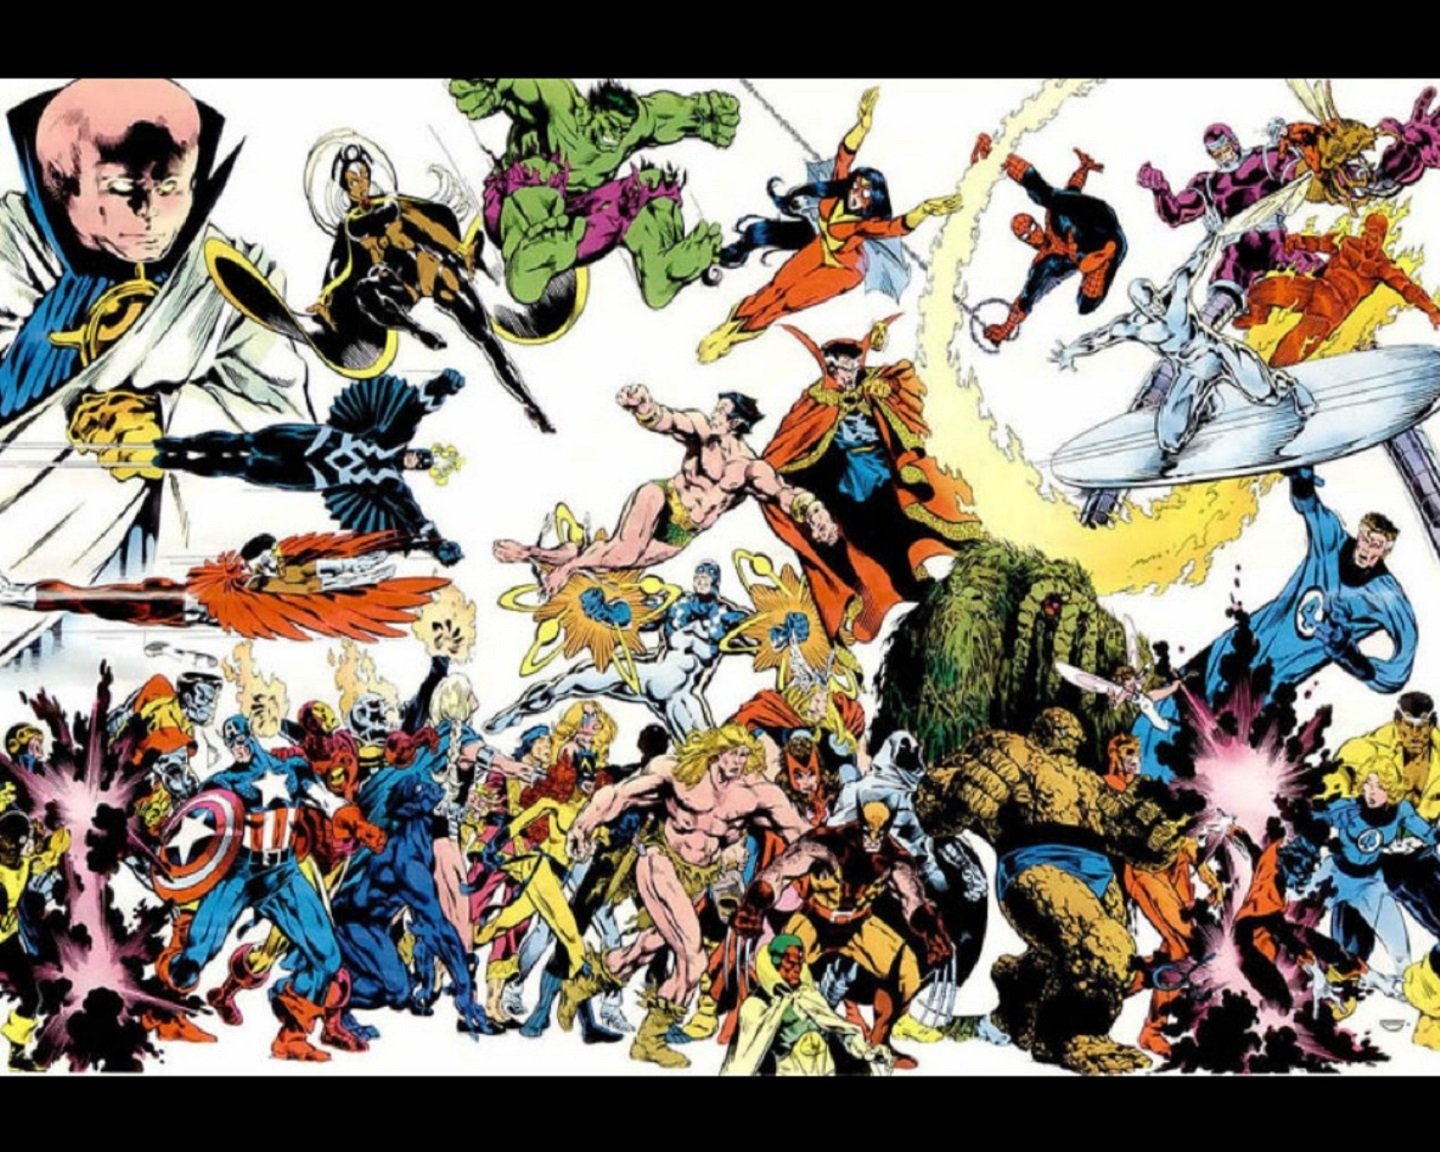 comic, Marvel, Characters, Superhero, Book, Entertainment Wallpaper